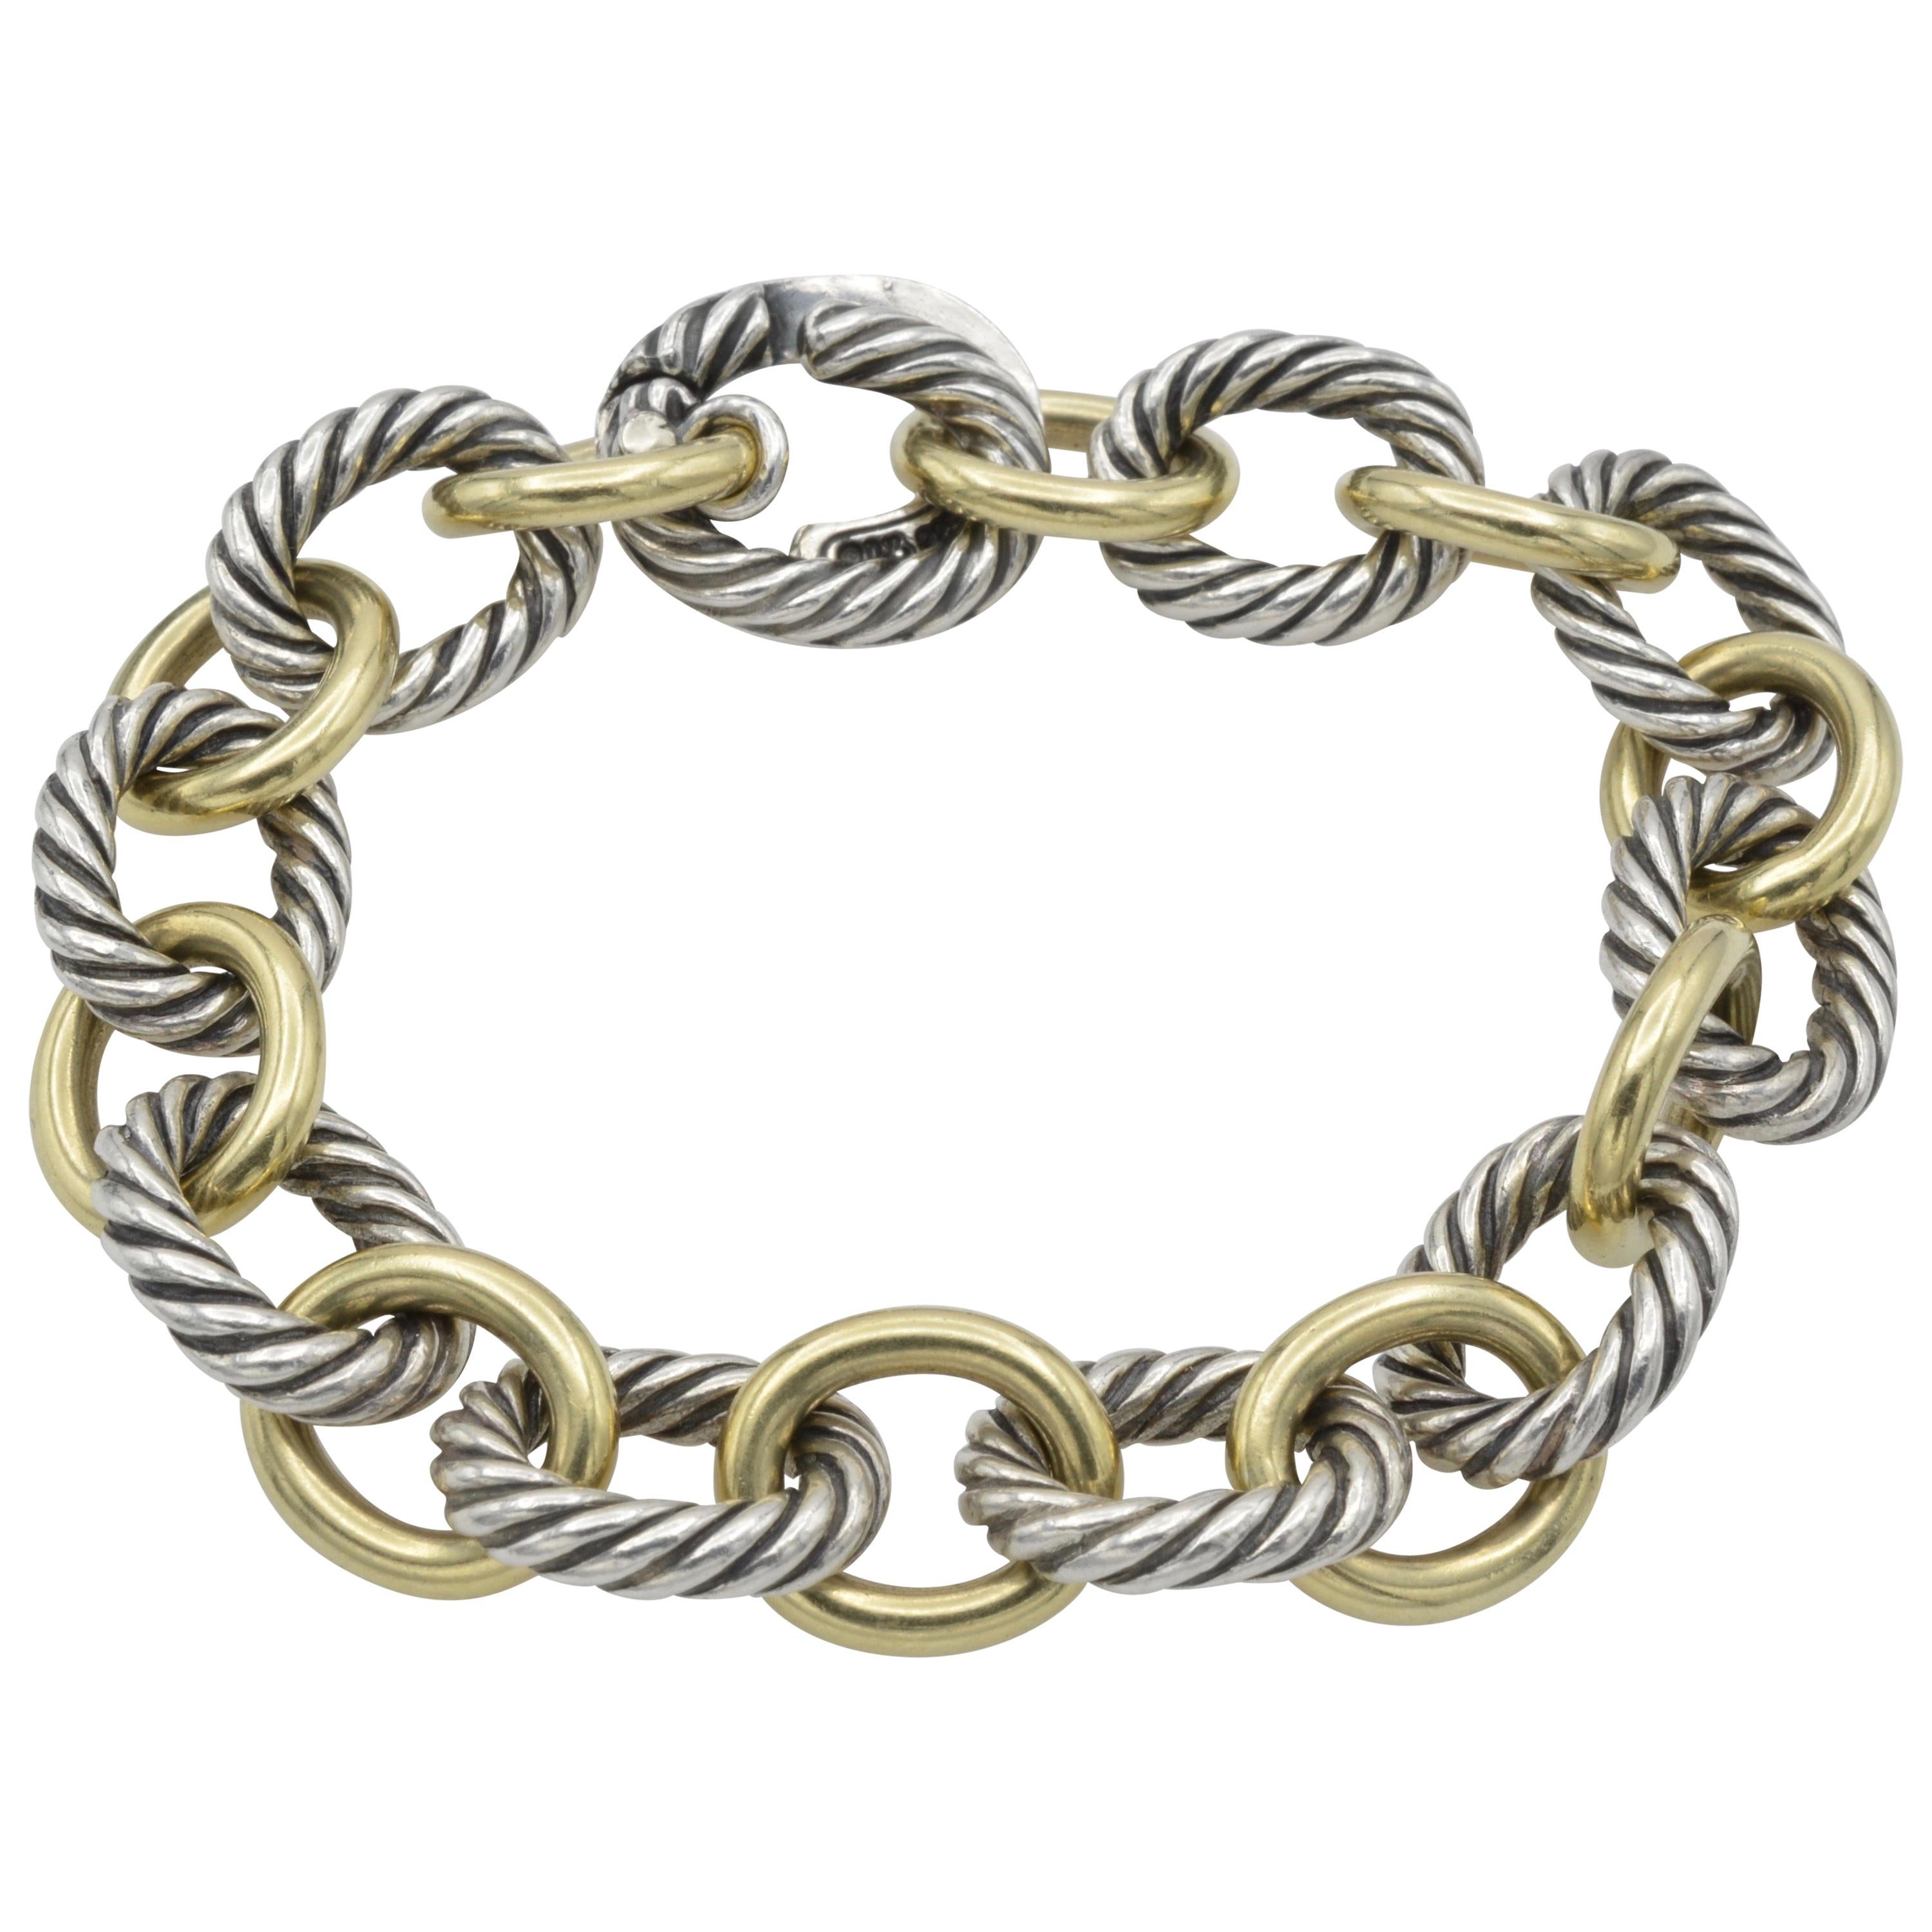 David Yurman Sterling Silver 18 Karat Gold Link Bracelet